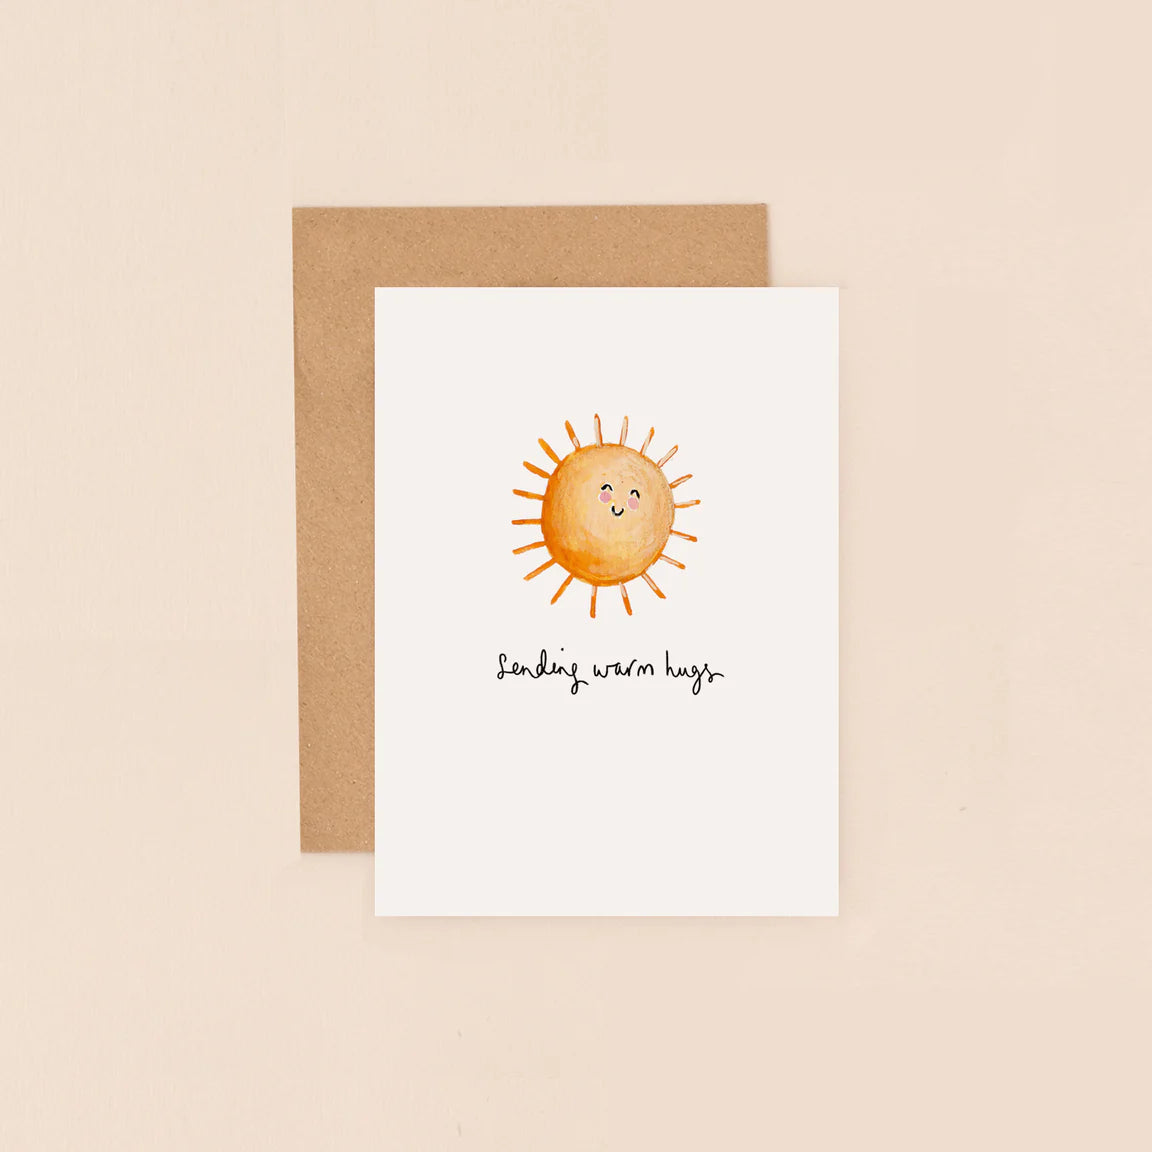 Fabulous Greeting Cards Louise Mulgrew Mini Card Sun Warm Hugs Card by Weirs of Baggot Street